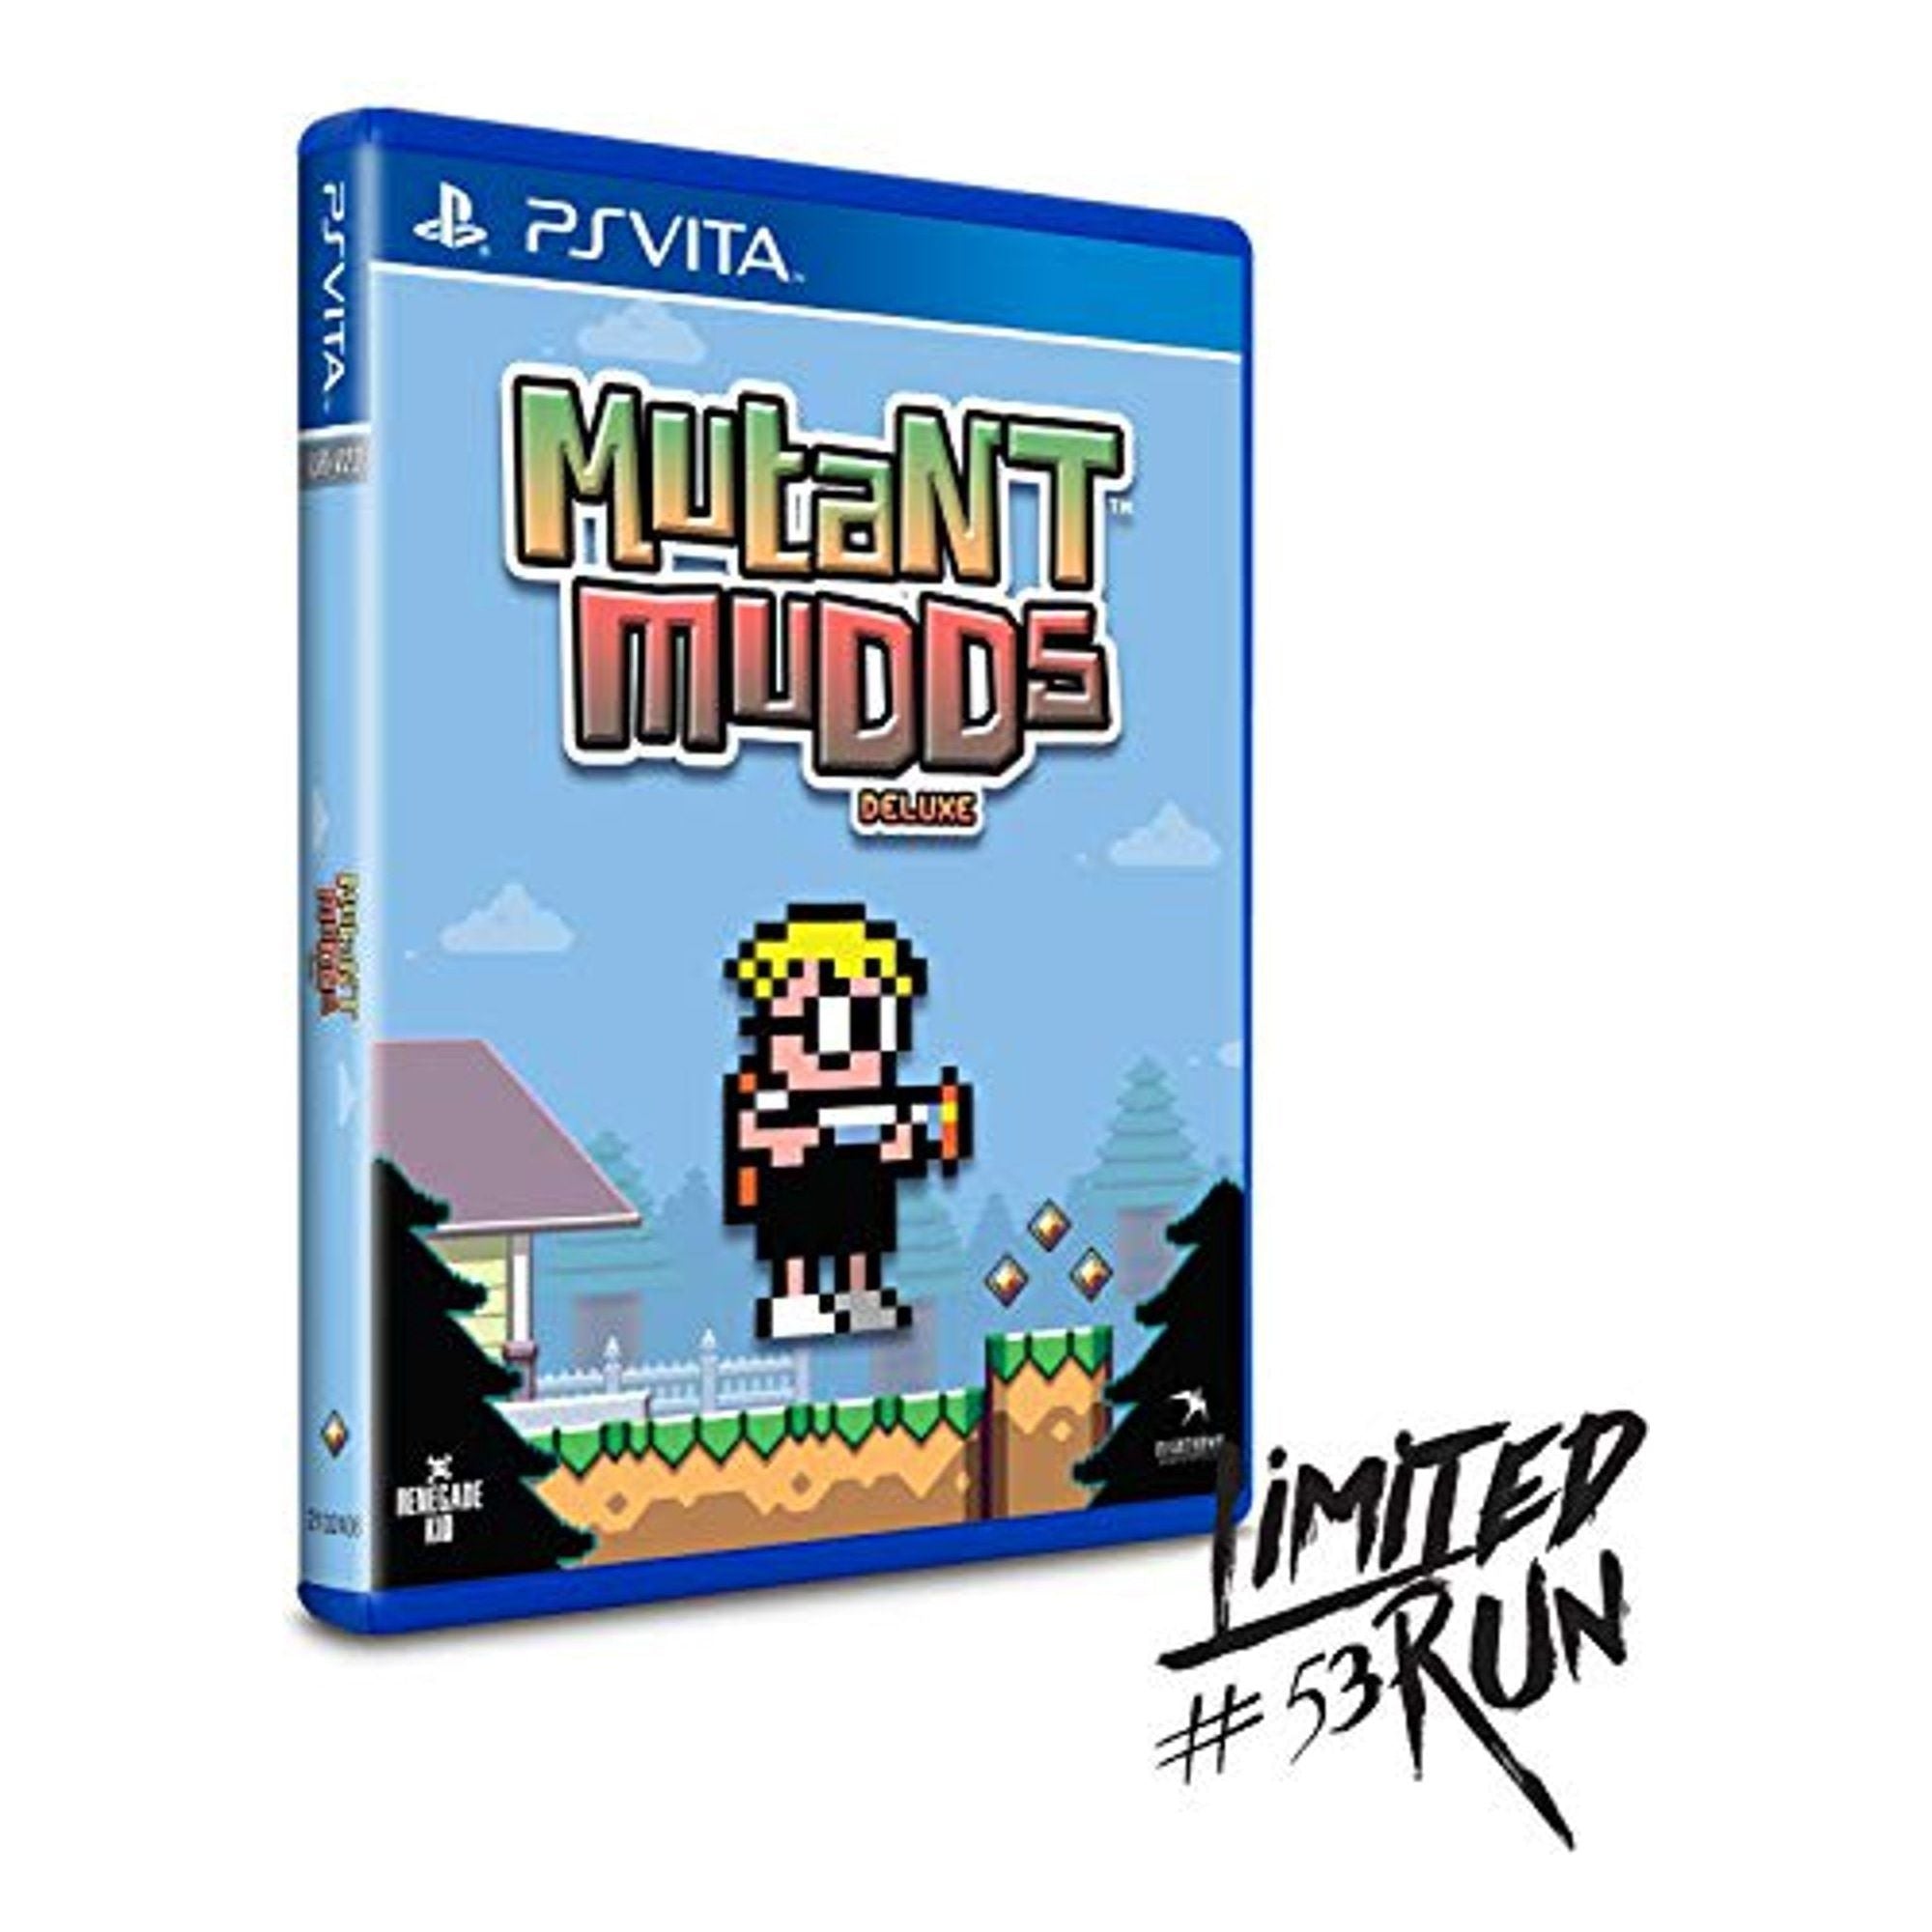 VITA - Mutant Mudds Deluxe (Limited Run Game #53) (In Case)